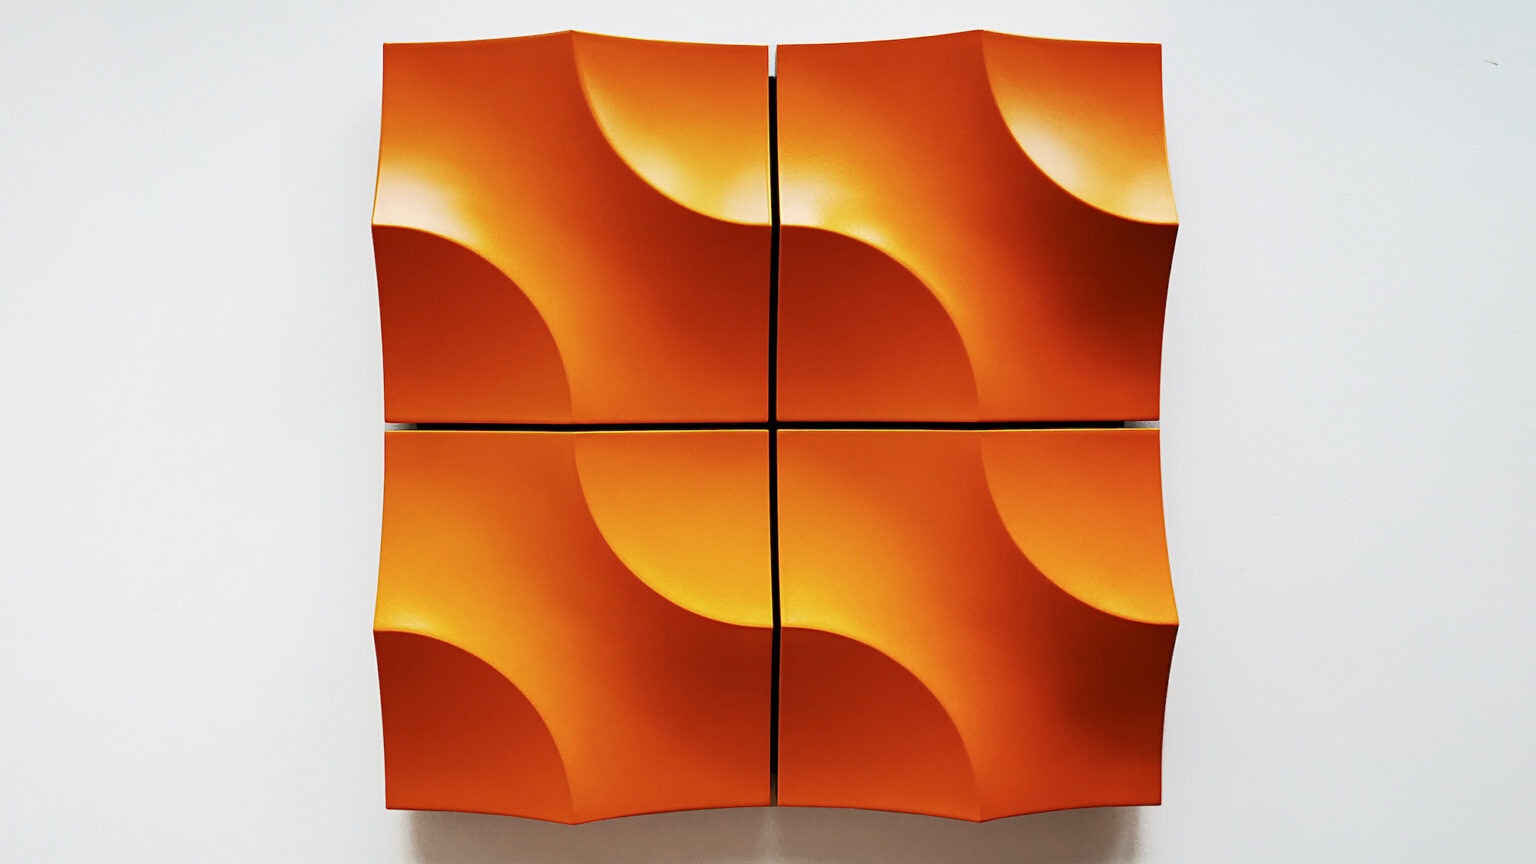 Oranje kunstwerk, geometrische vormen die een golvend patroon vormen.